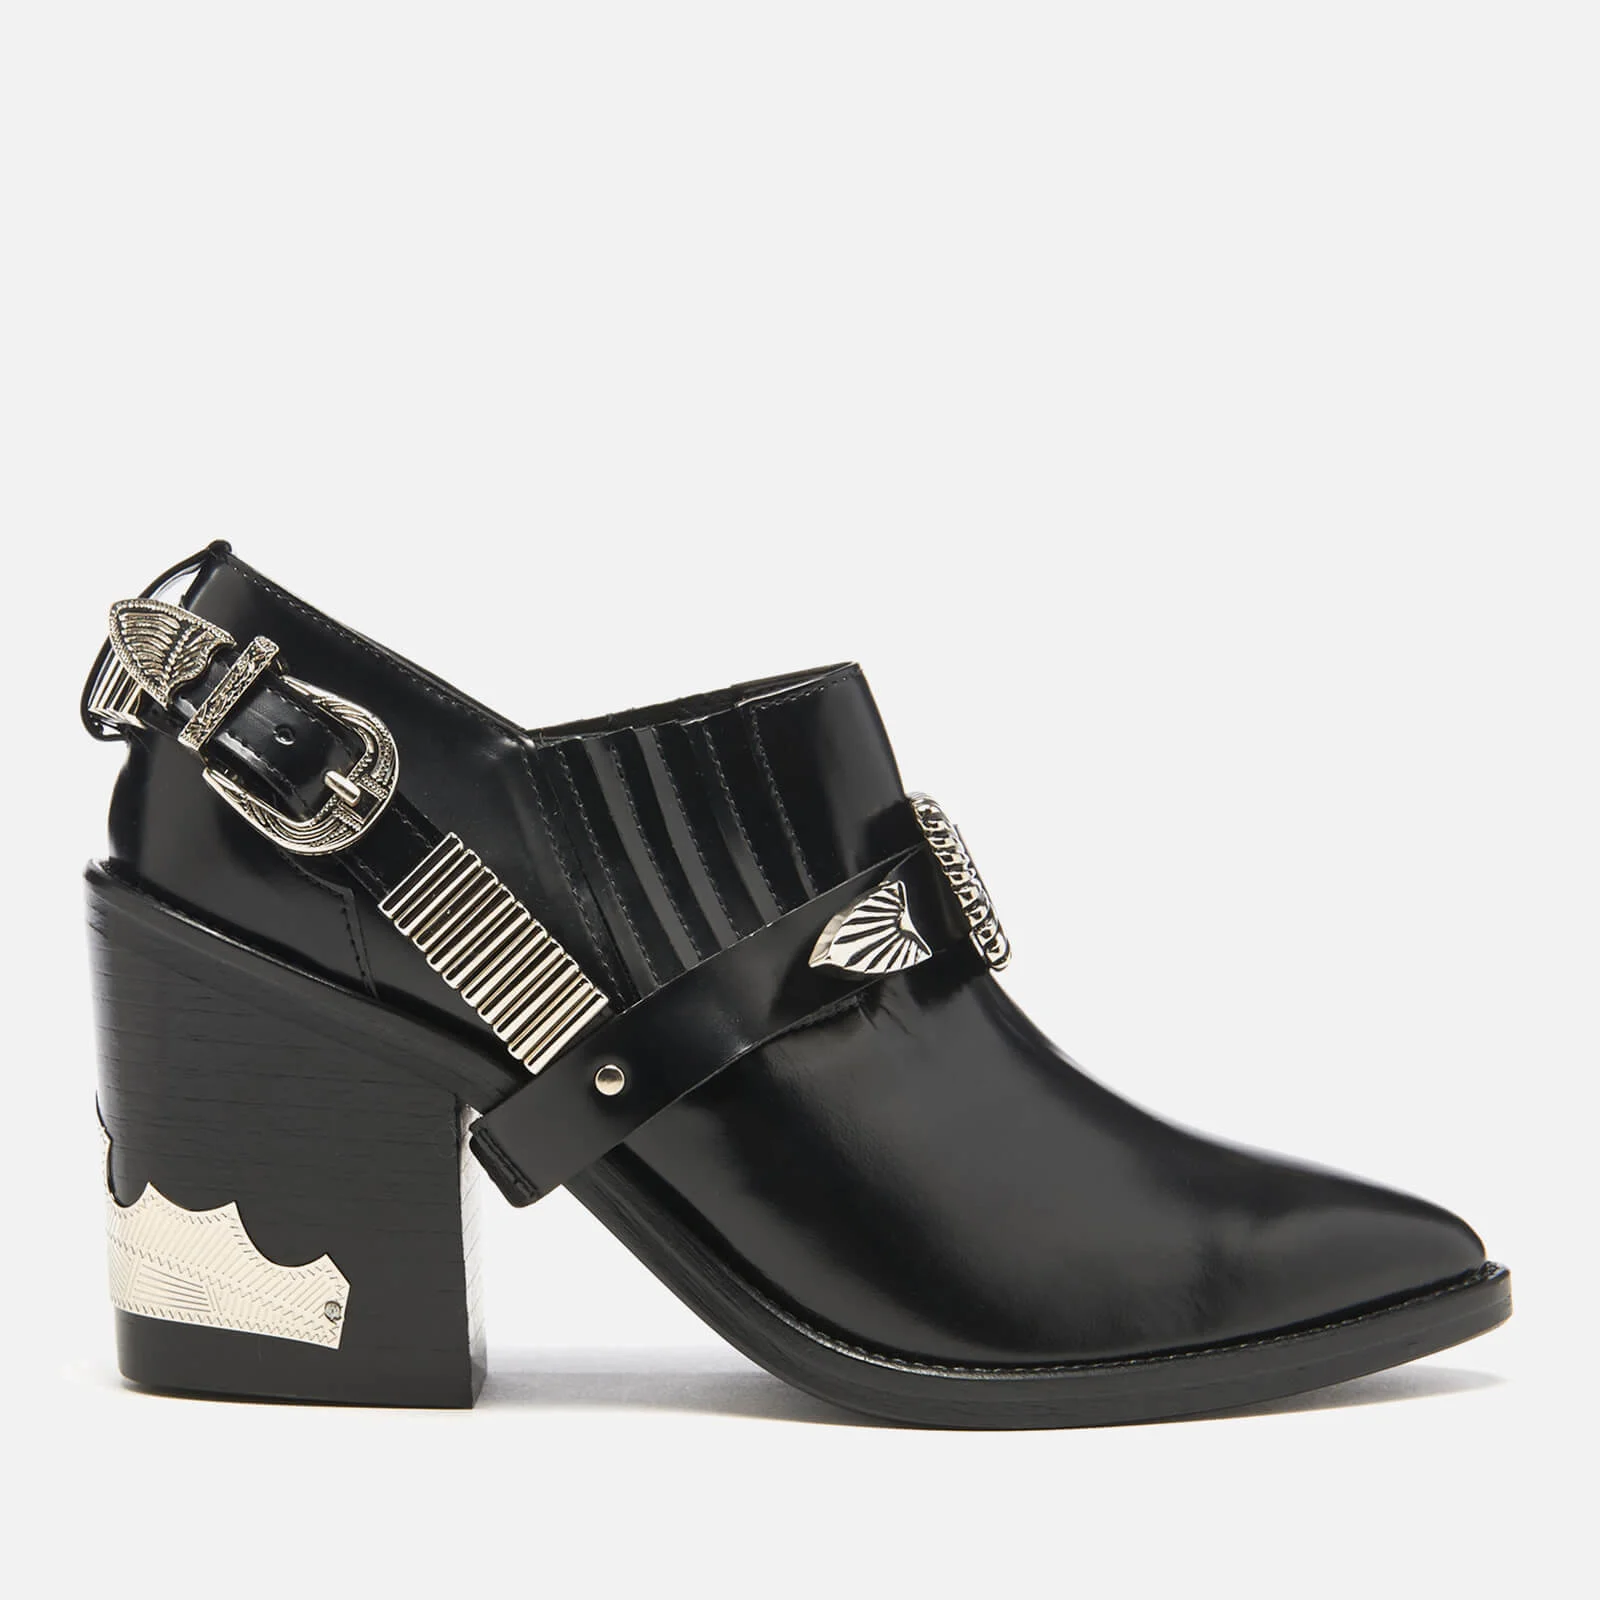 Toga Pulla Women's Leather Heeled Shoe Boots - Black Image 1